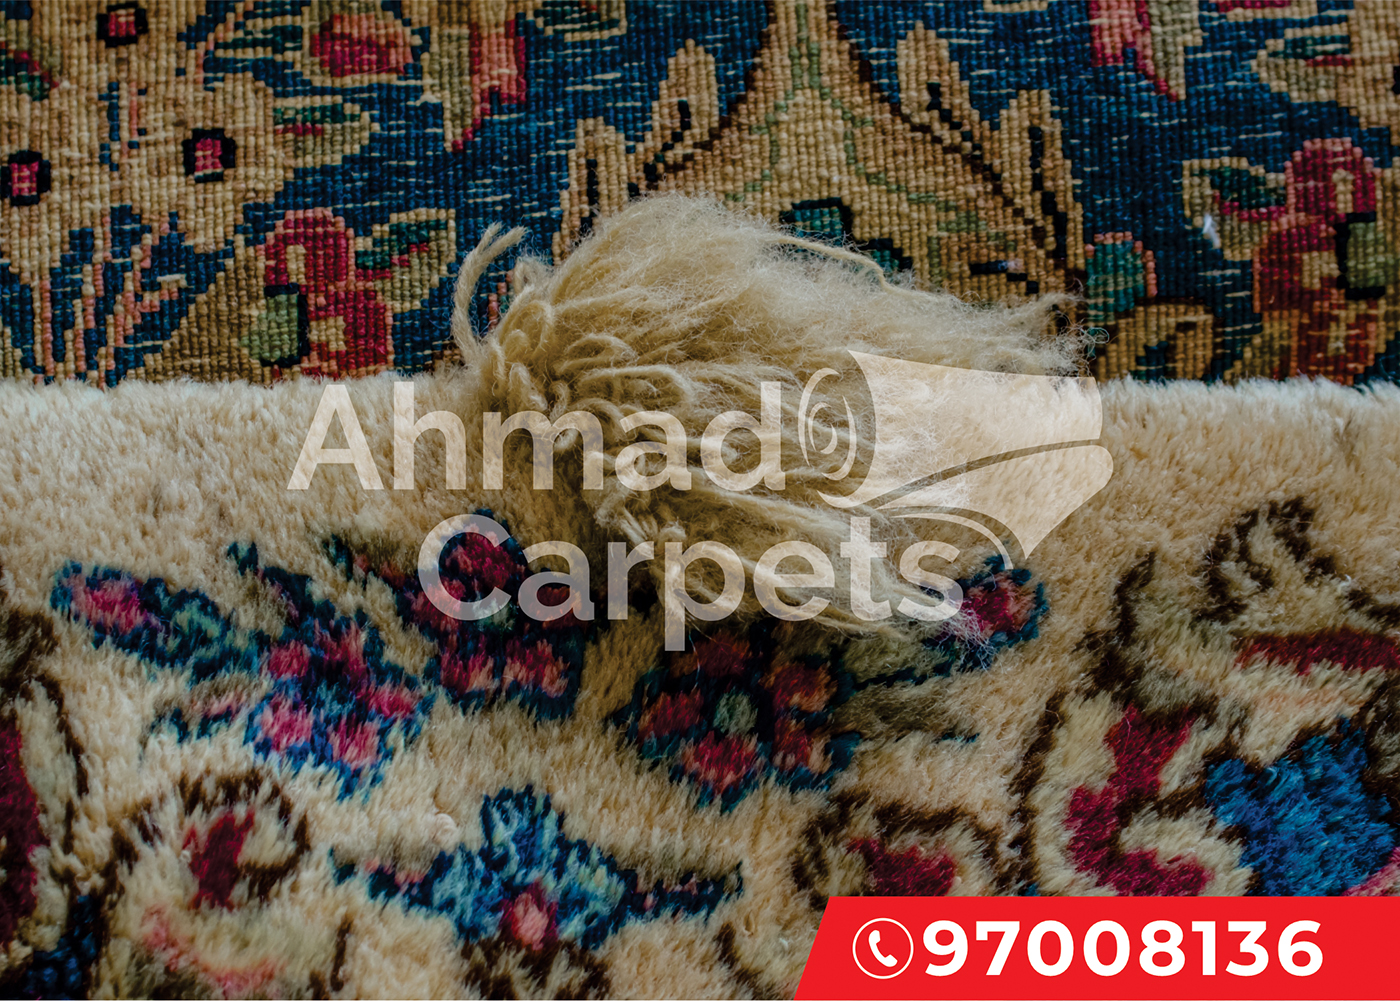 Ayesha Carpets shop